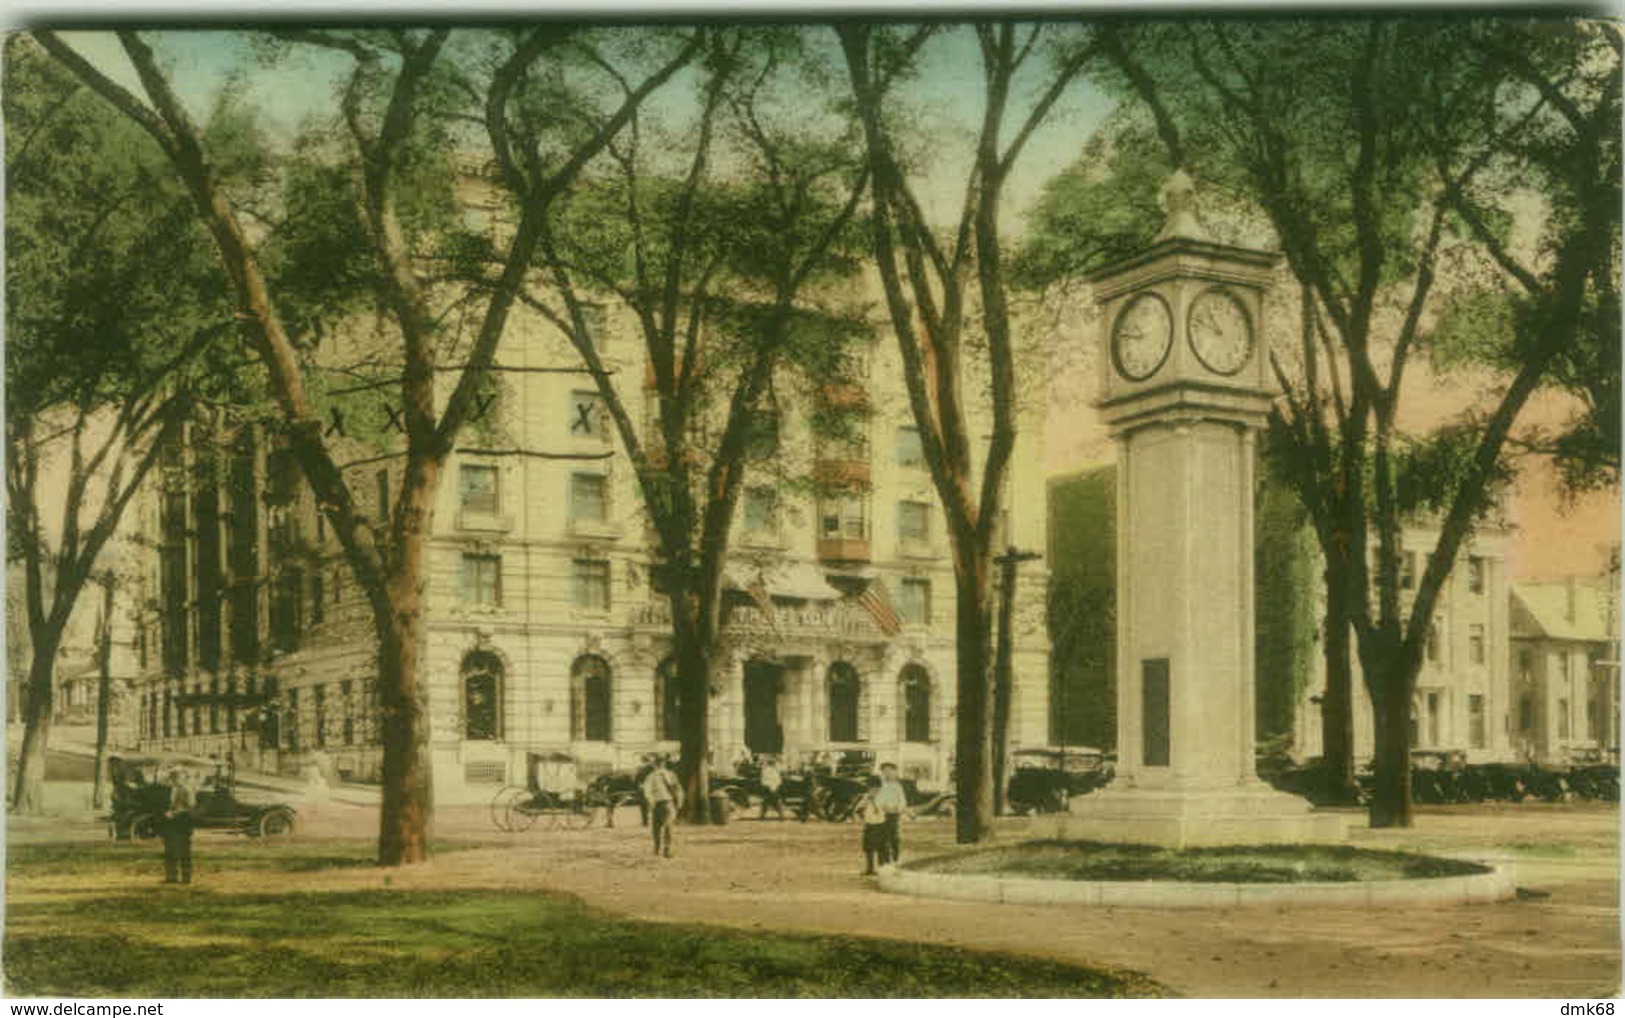 U.S.A. WATERBURY - HOTEL ELTON -  THE CLOCK ON THE GREEN - 1920s (BG1782) - Waterbury